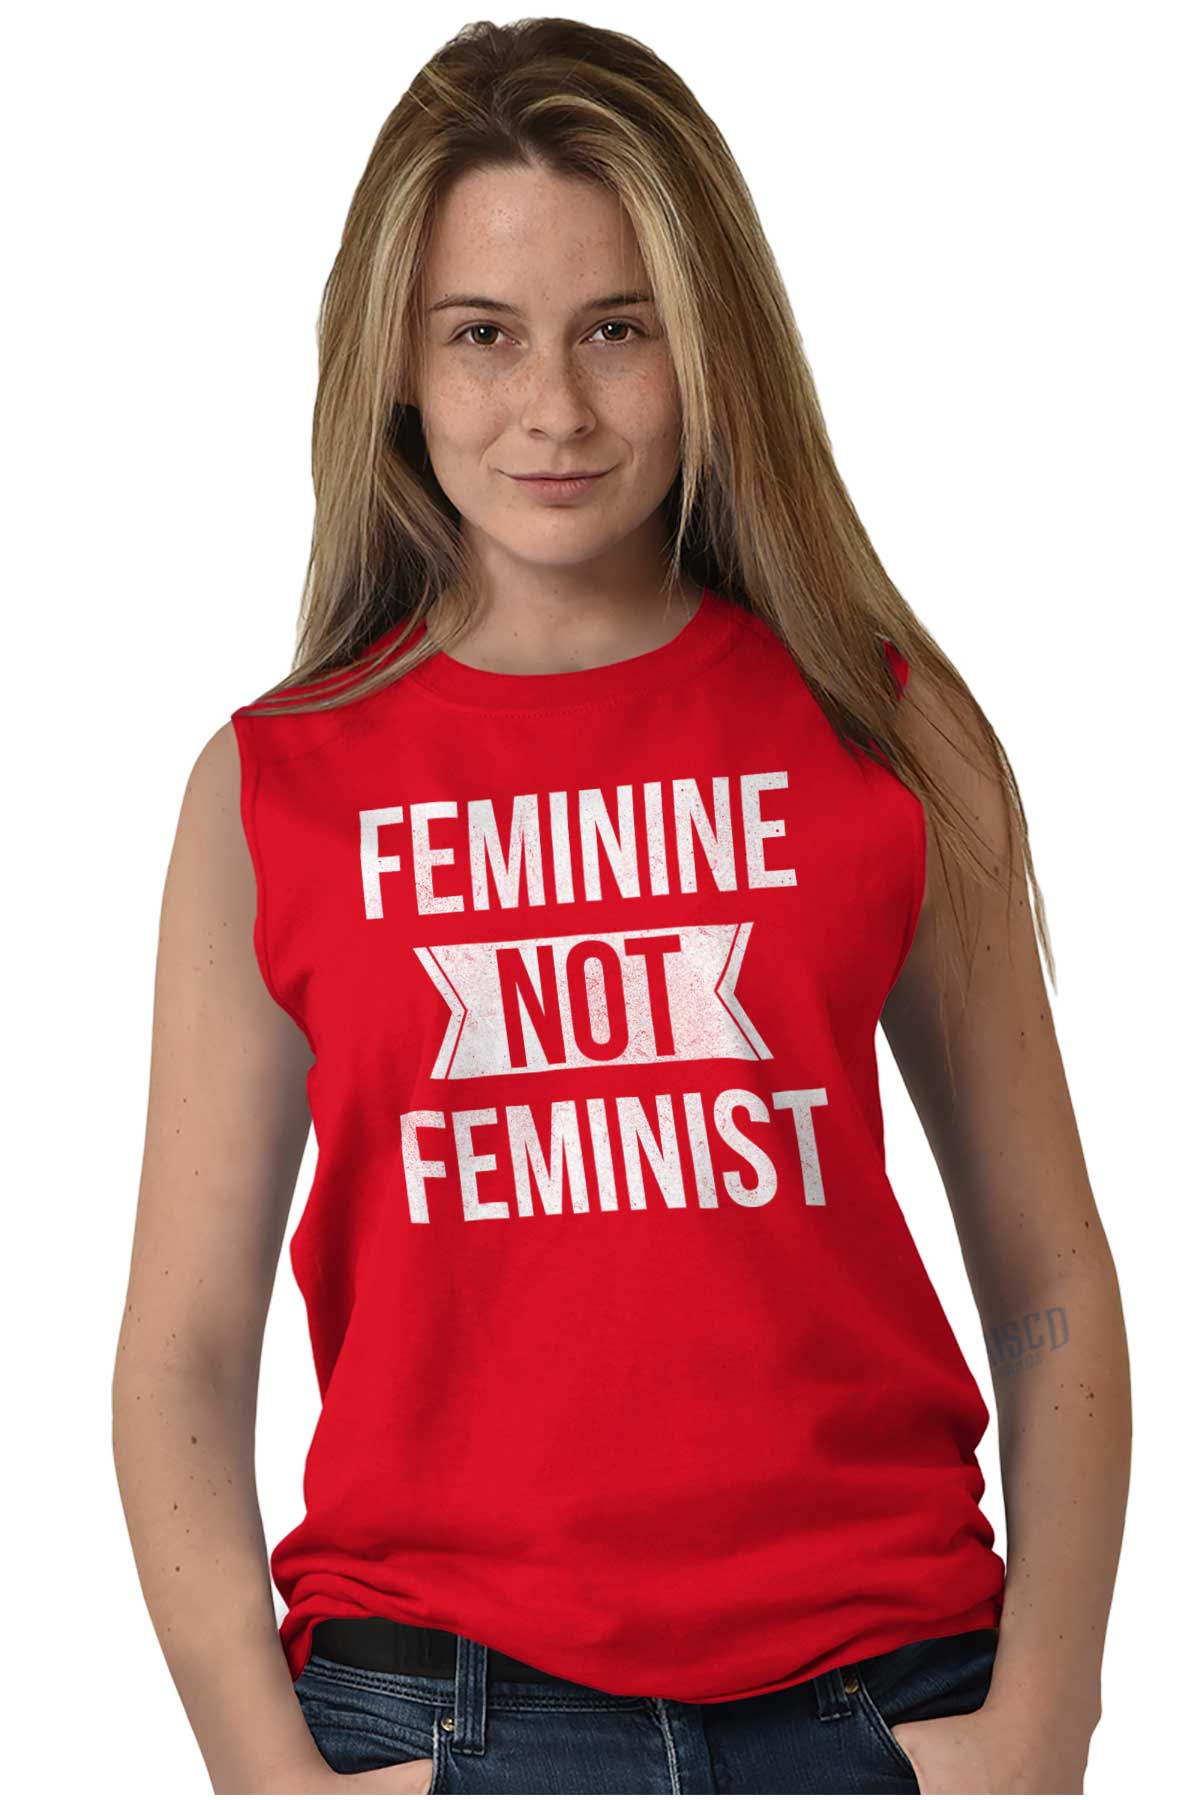 Feminine Not Feminist Political Republican Casual Tank Tops Shirts For ...